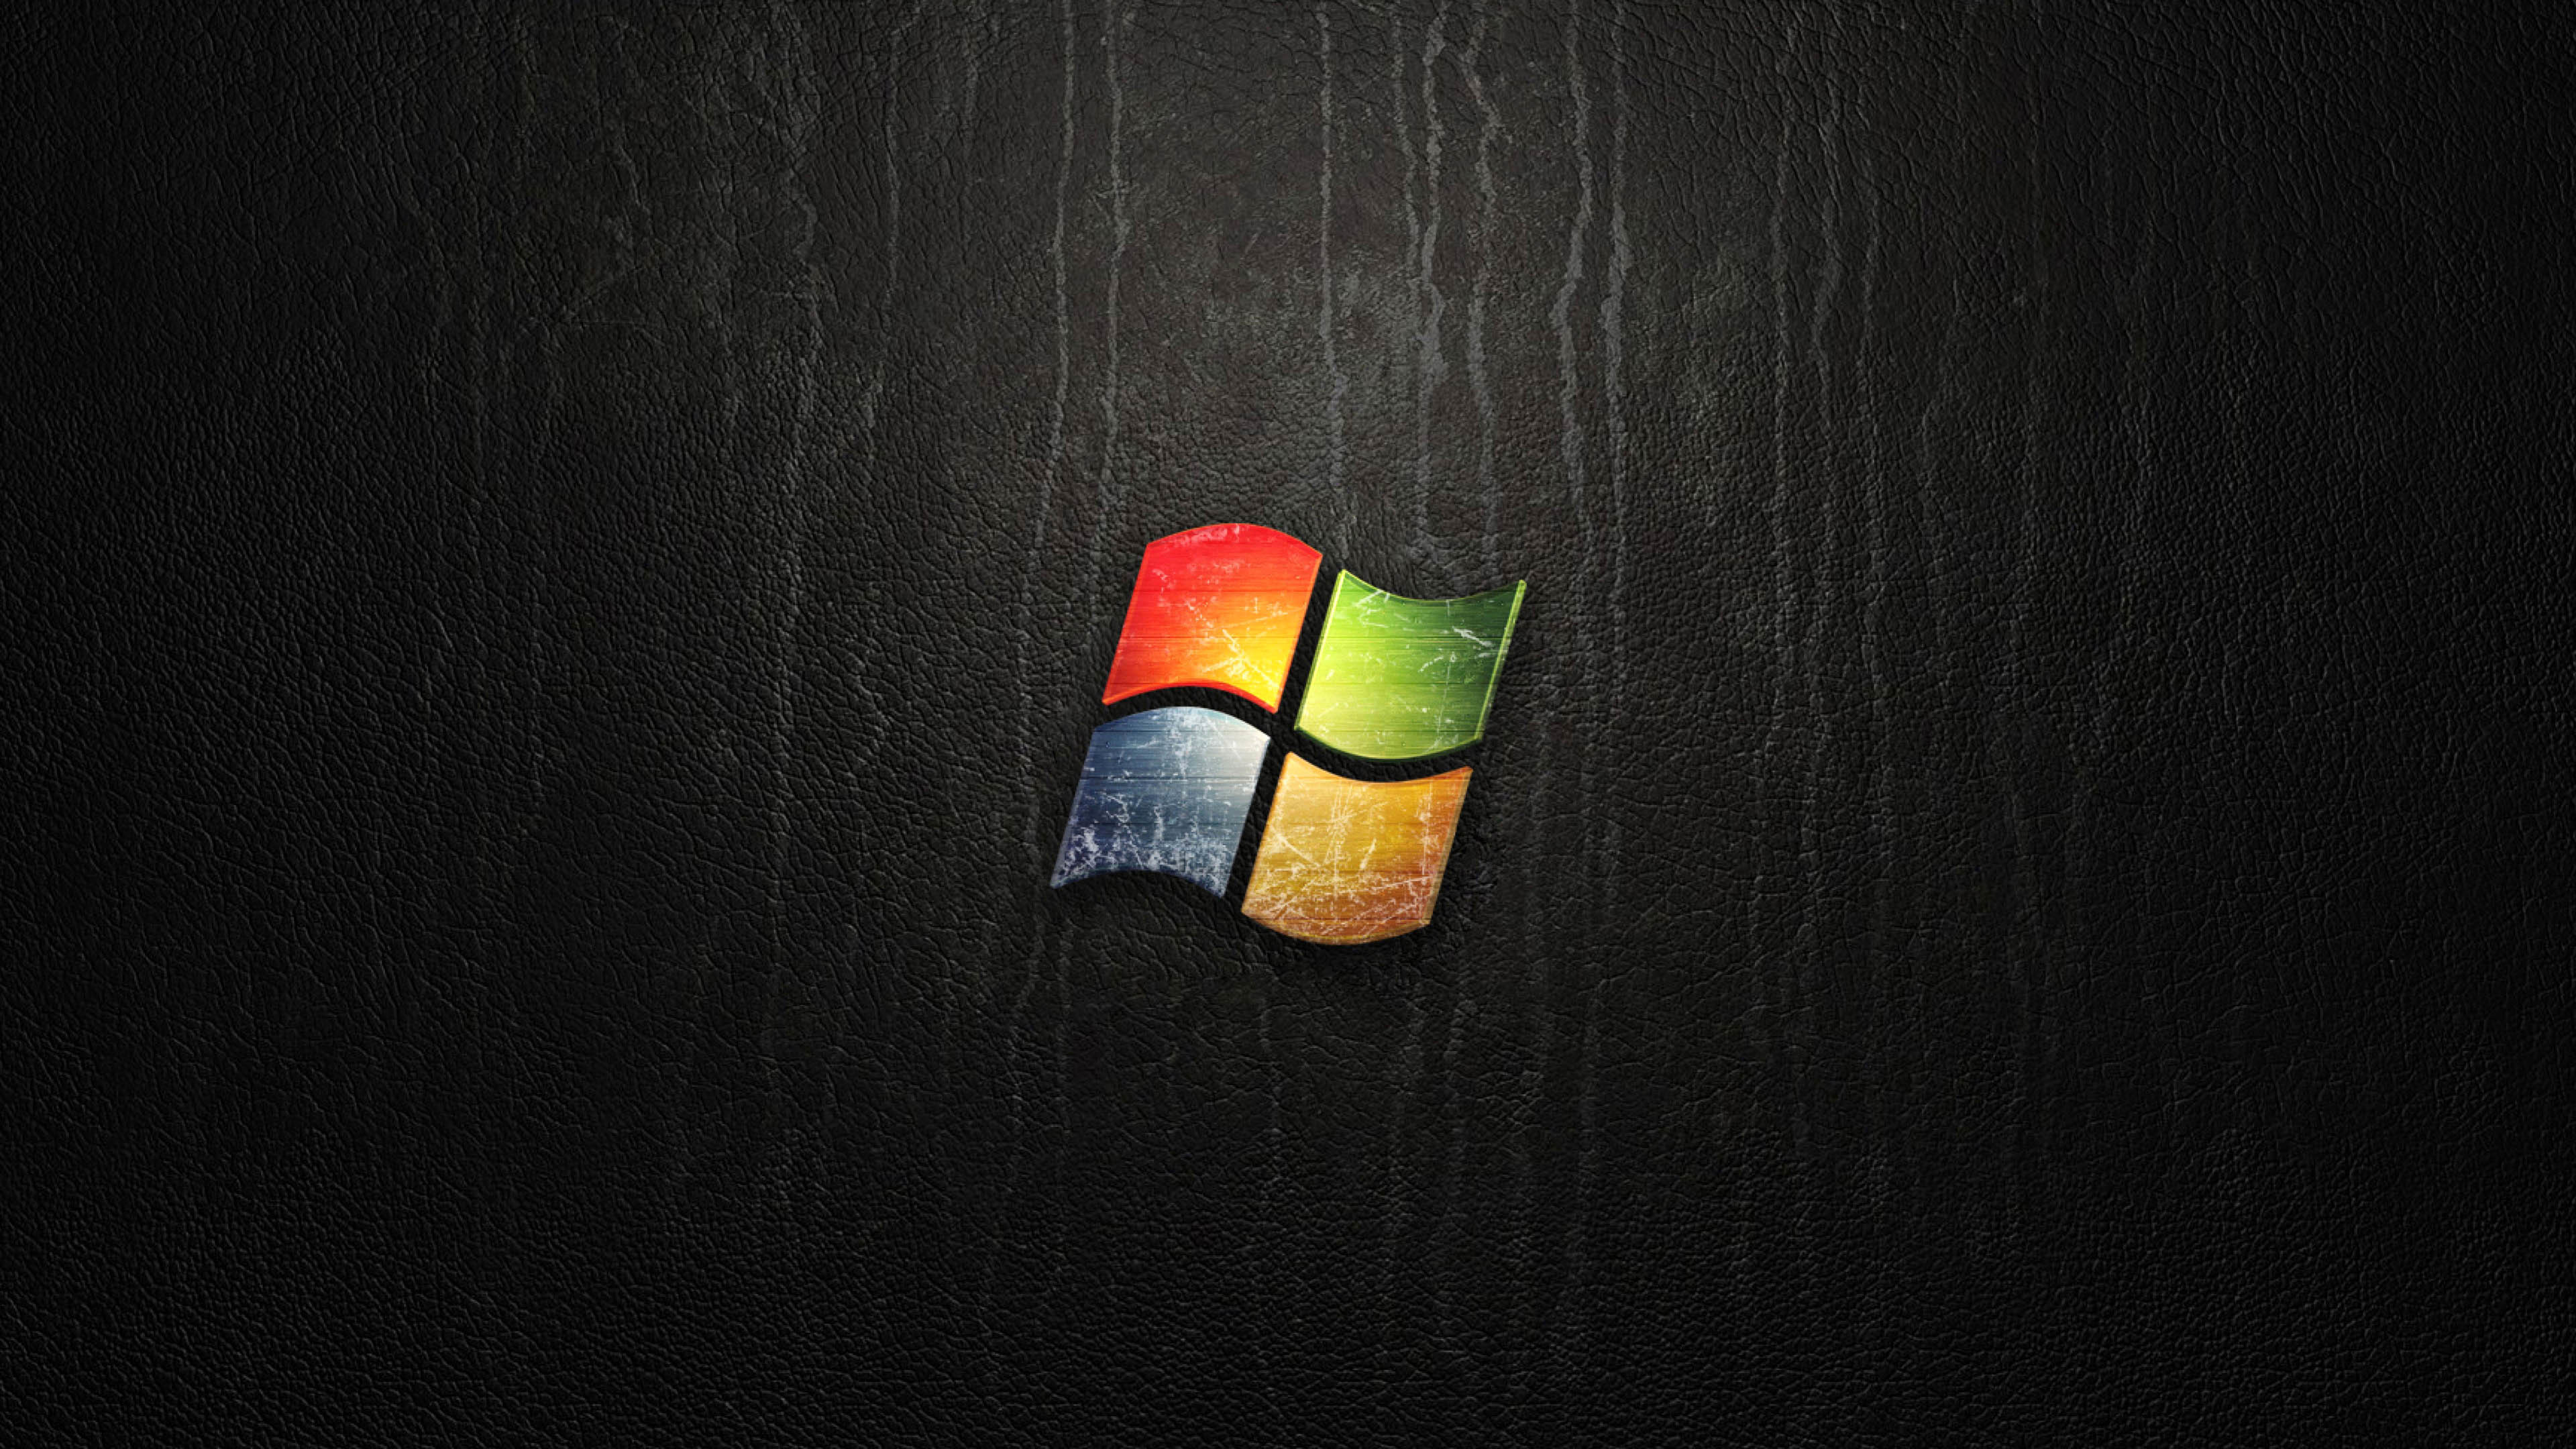 3840x2160 Windows Logo on Leather Texture  wallpaper